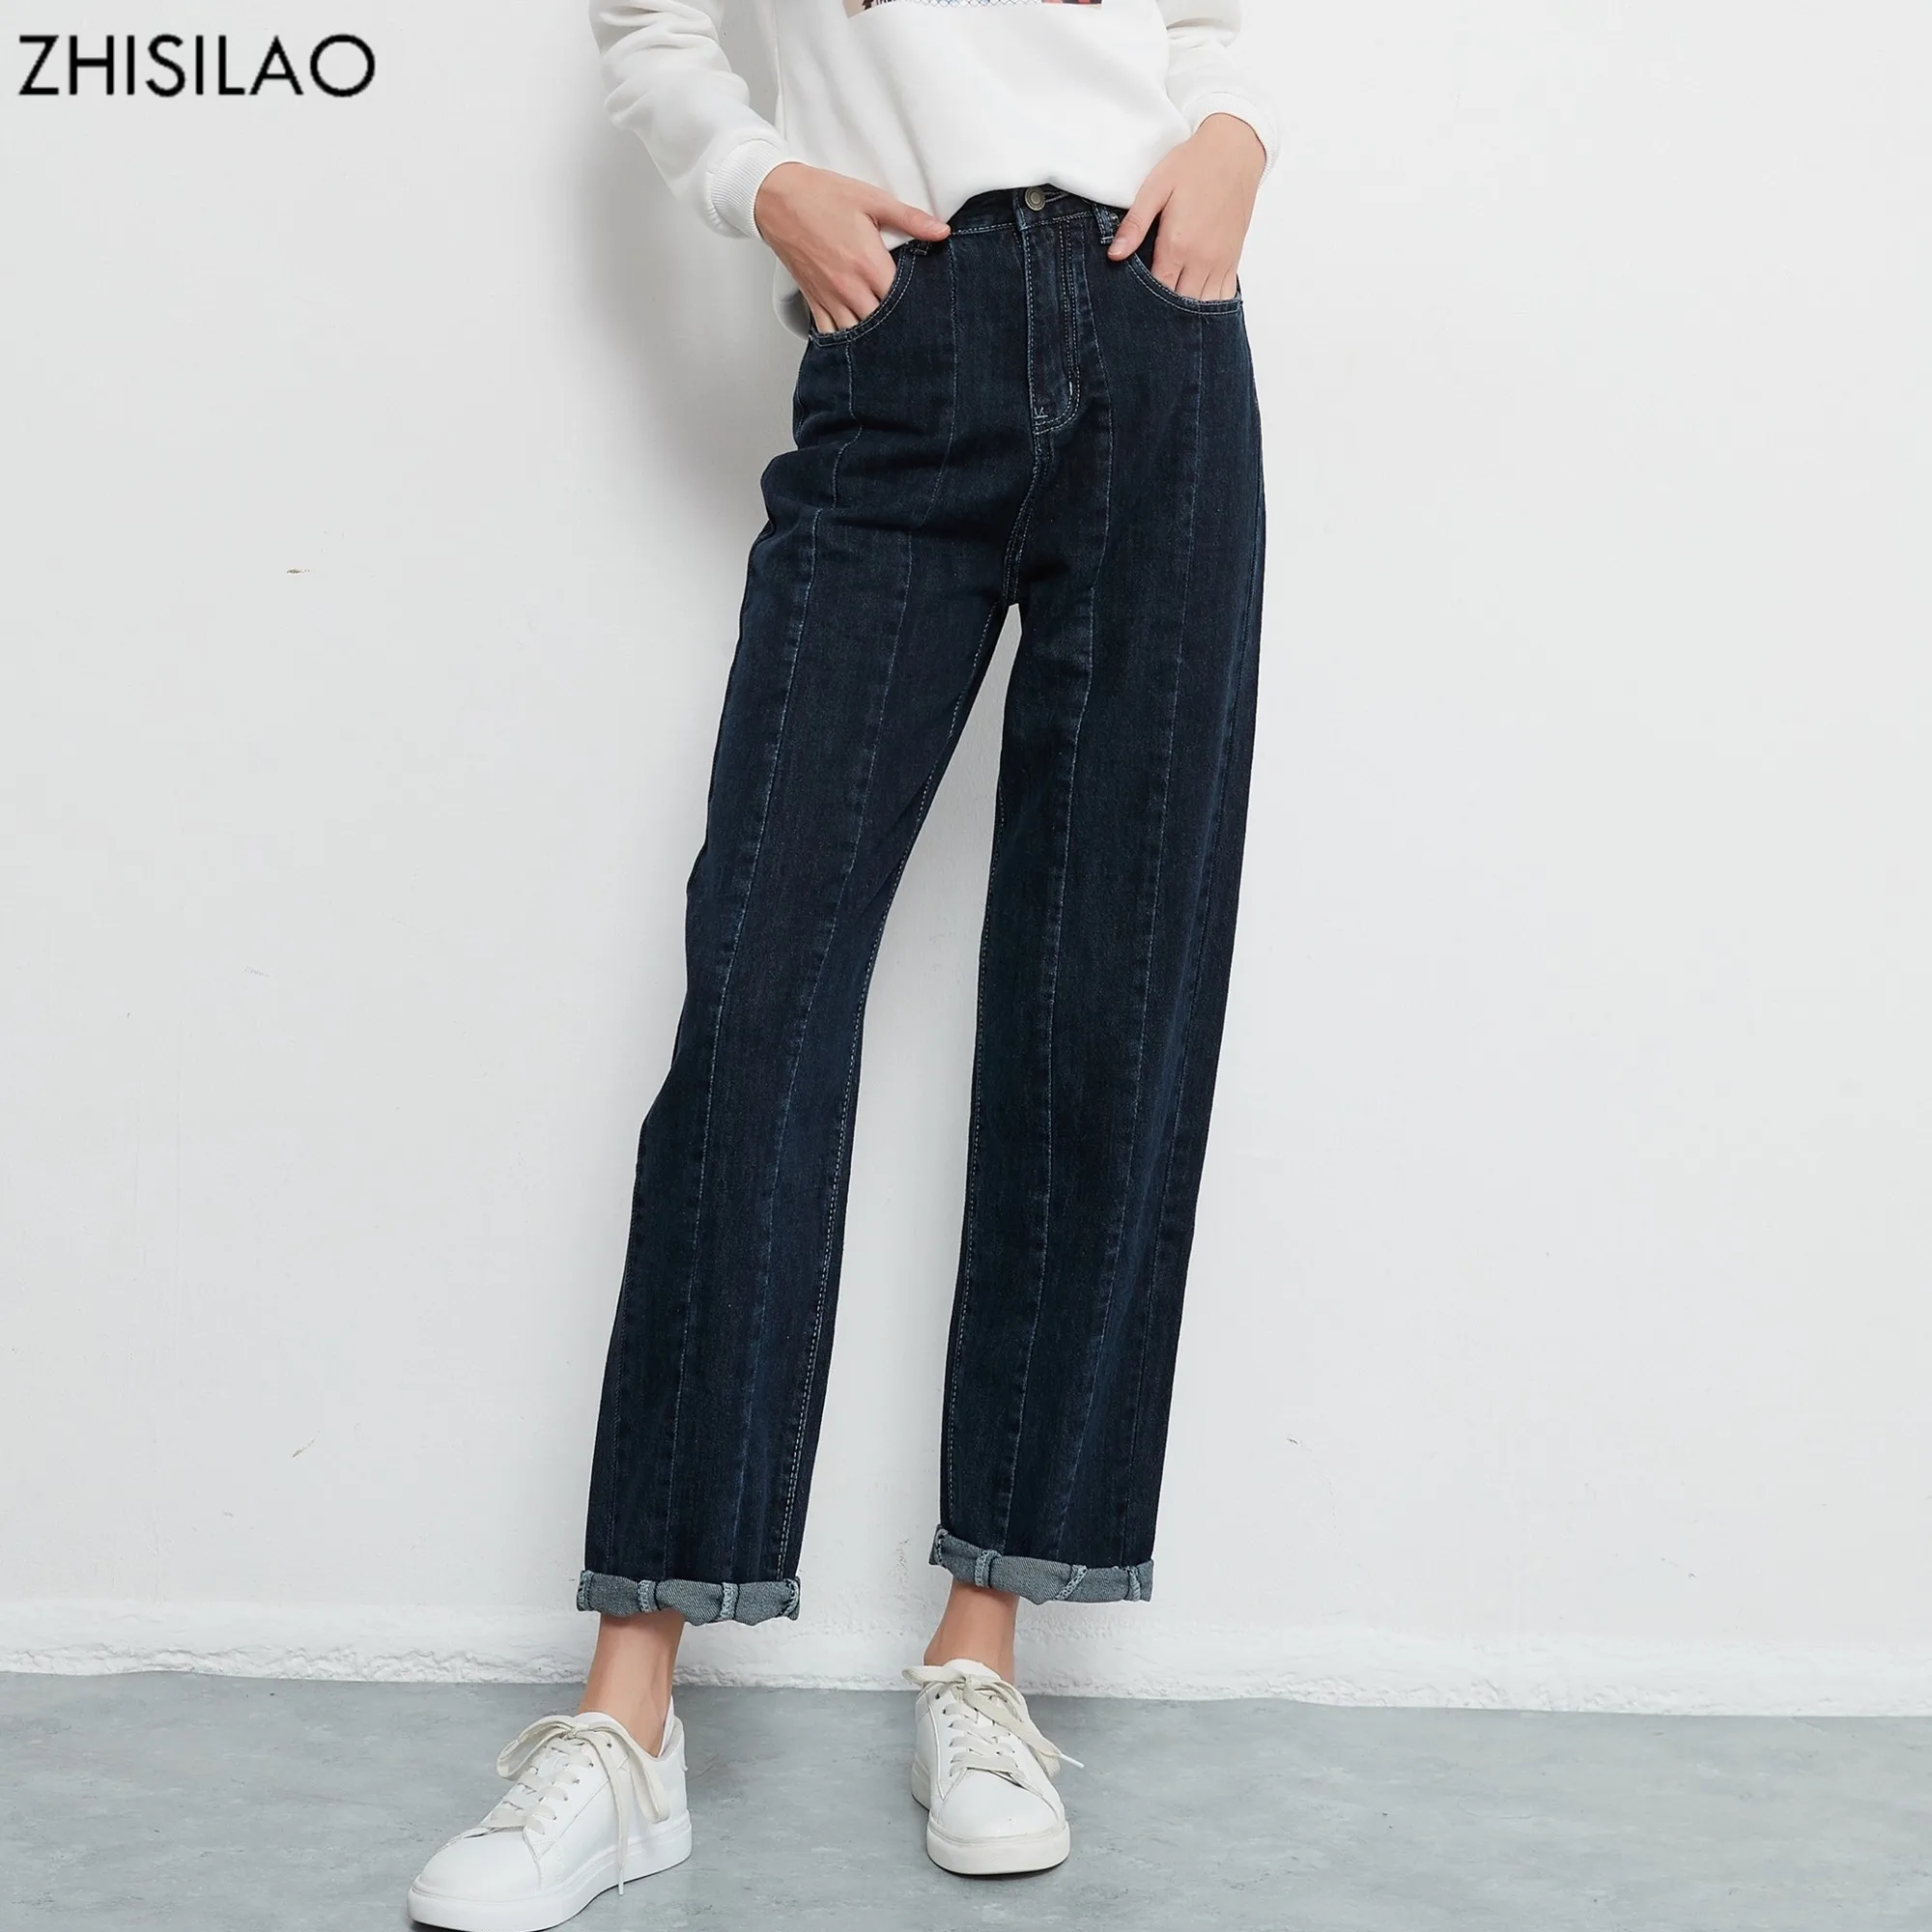 

ZHISILAO Vintage Loose Wide Leg Straight Jeans Women Boyfriend High Waist Longer Denim Pants Autumn 2021 Baggy Jeans Streetwear